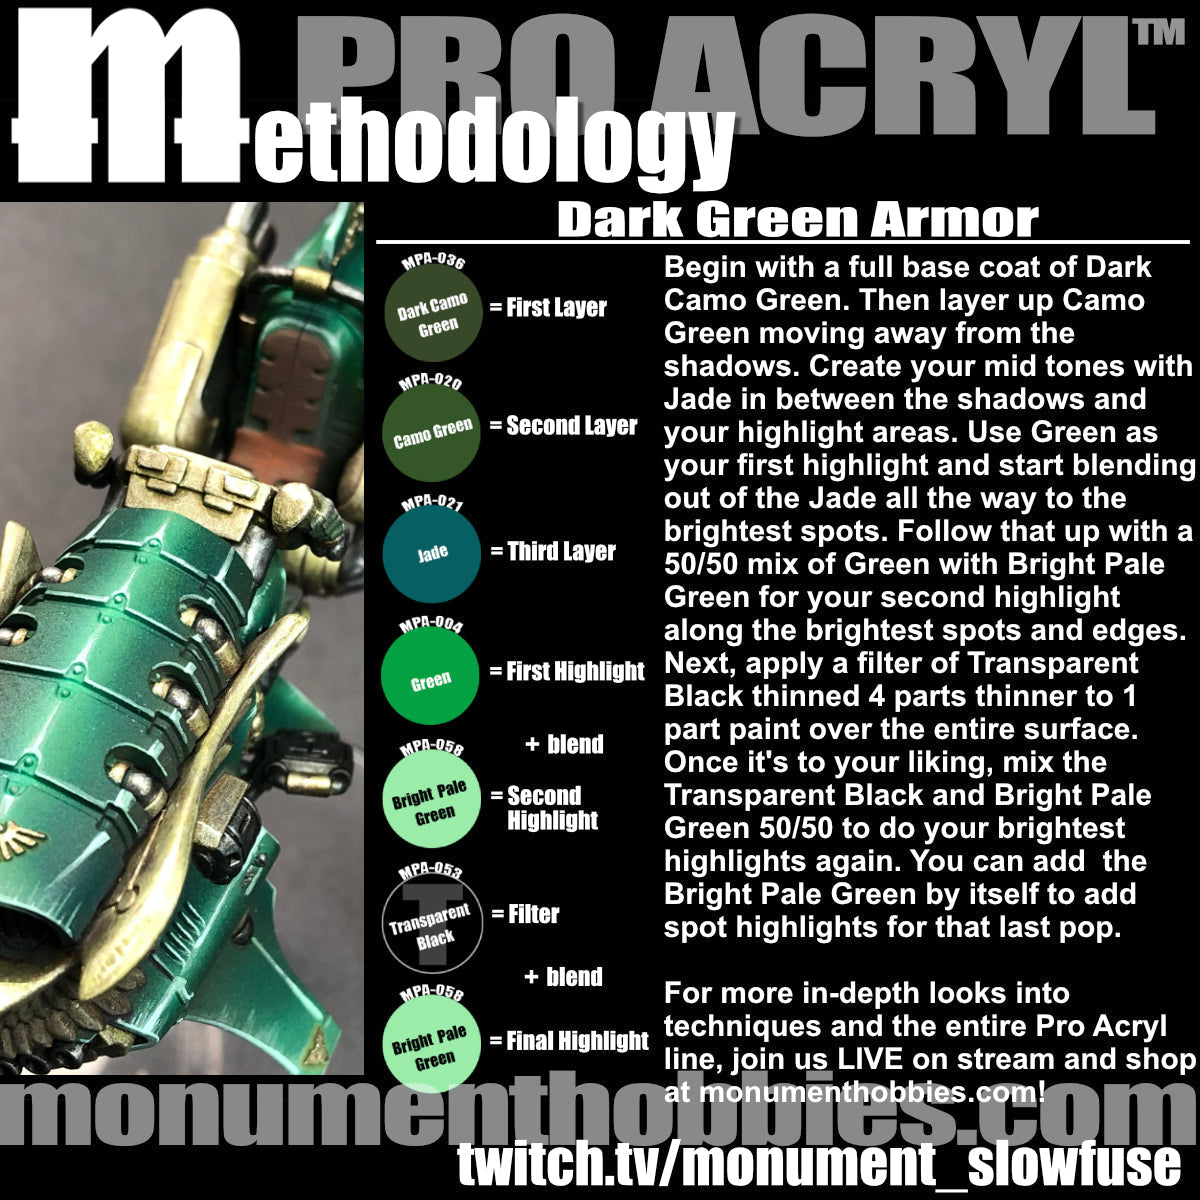 Methodology #25 - Dark Green Armor!